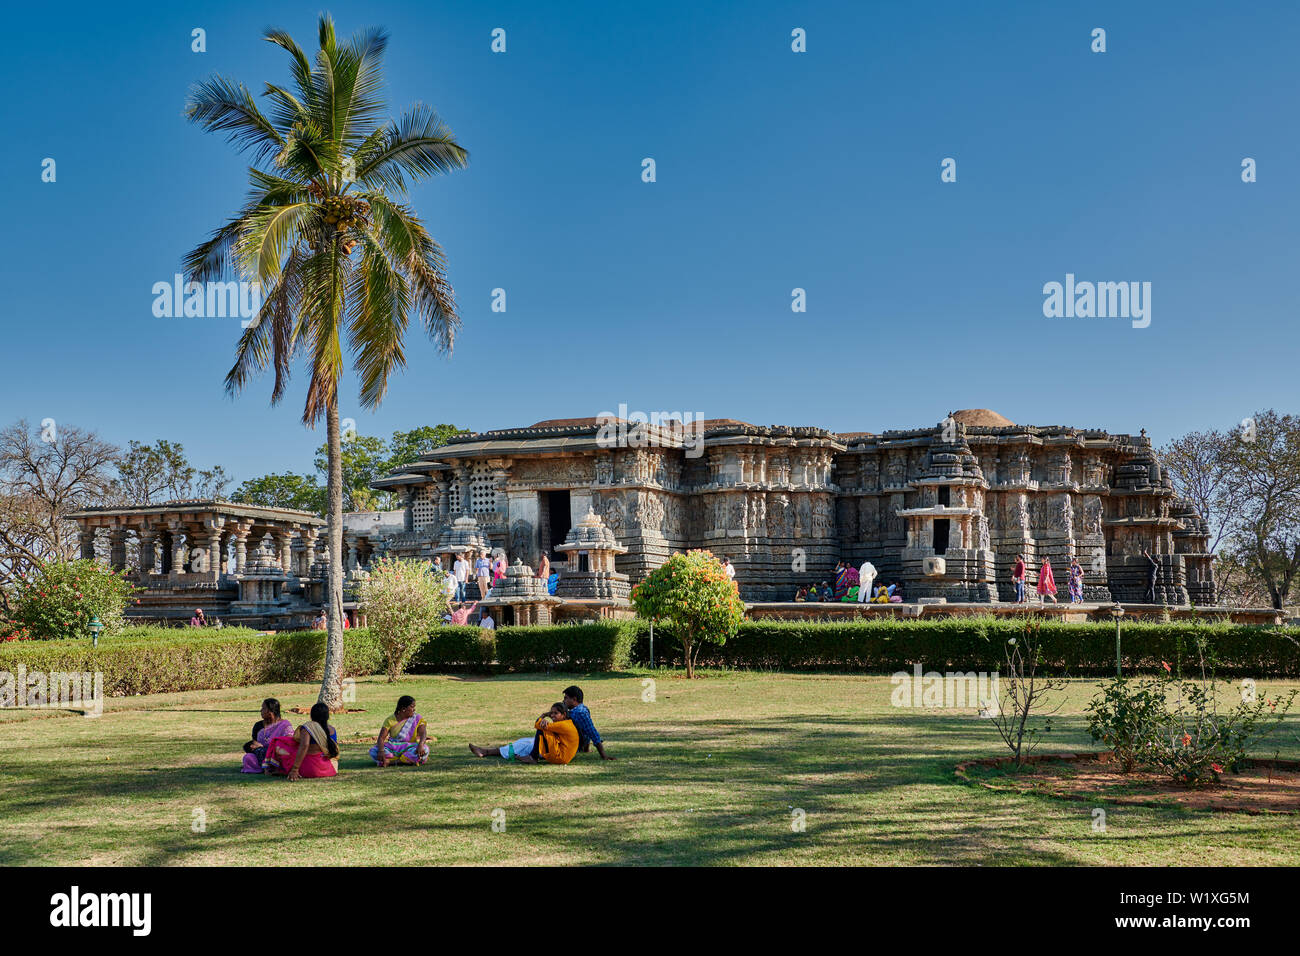 Halebid Hoysaleswara Jain Tempel, Dwarasamudra (Tor zur See), Halebidu, Hassan, Karnataka, Indien Stockfoto